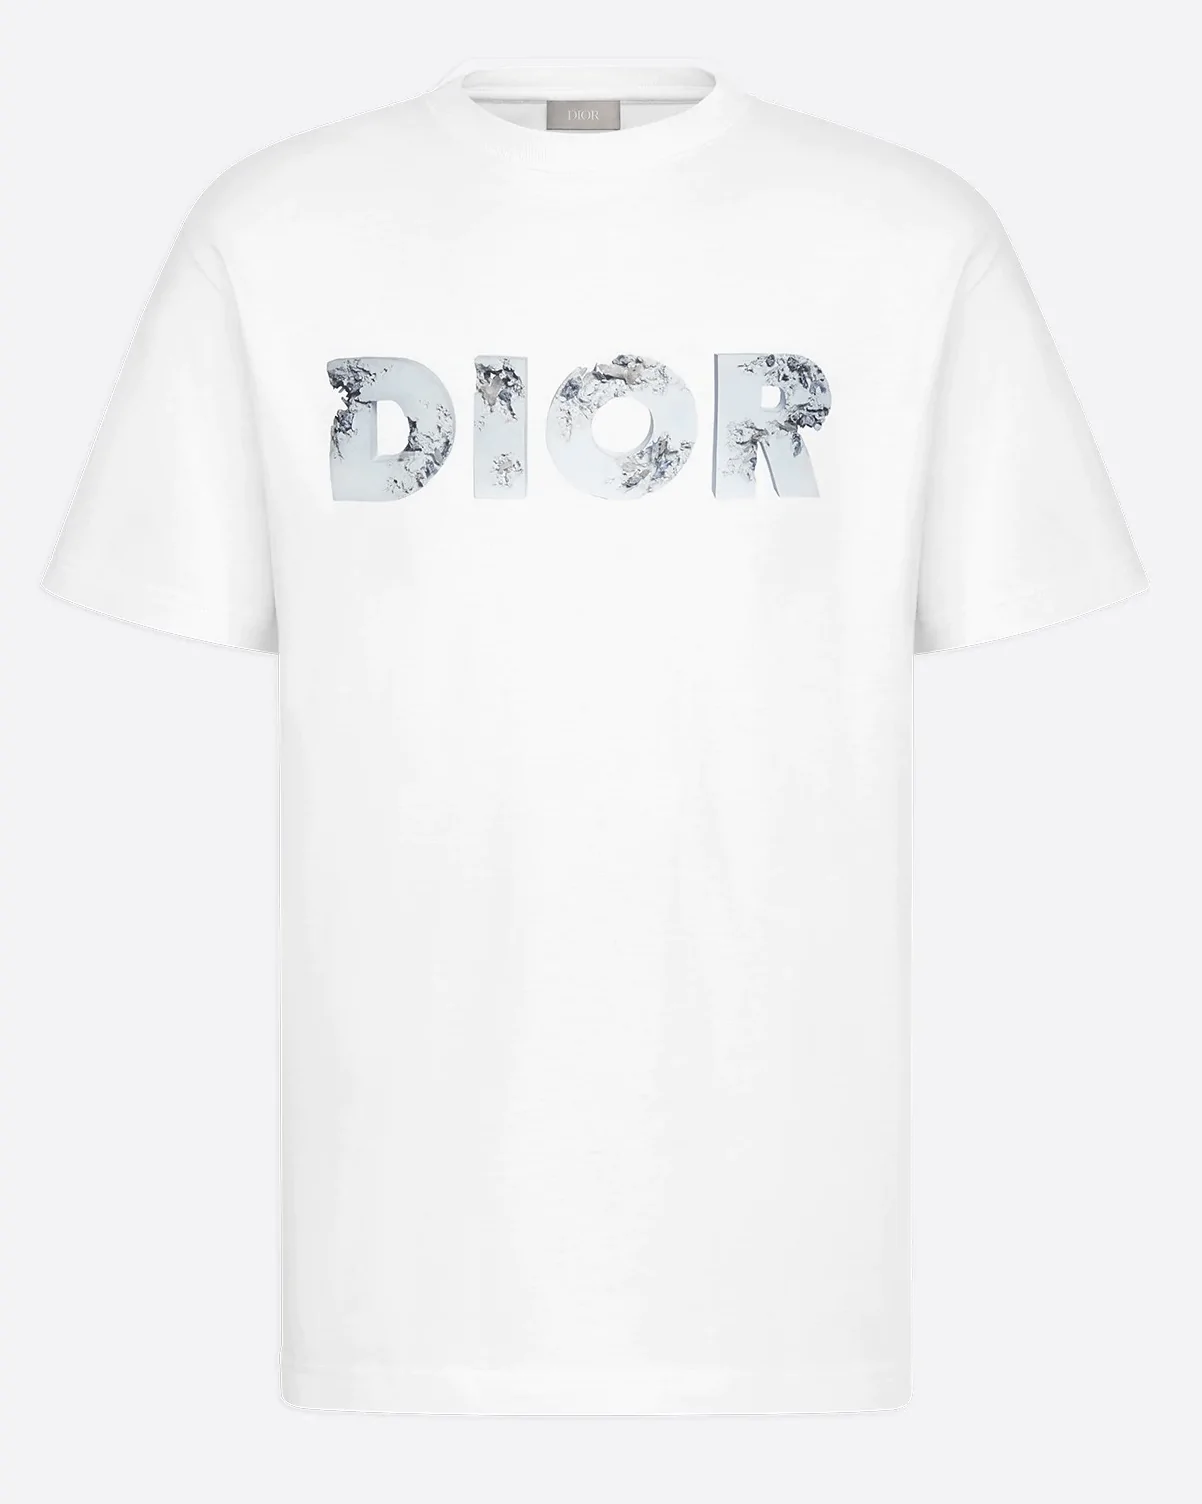 Dior and Daniel Arsham Eroded-Effect 3D Printed Logo T-Shirt